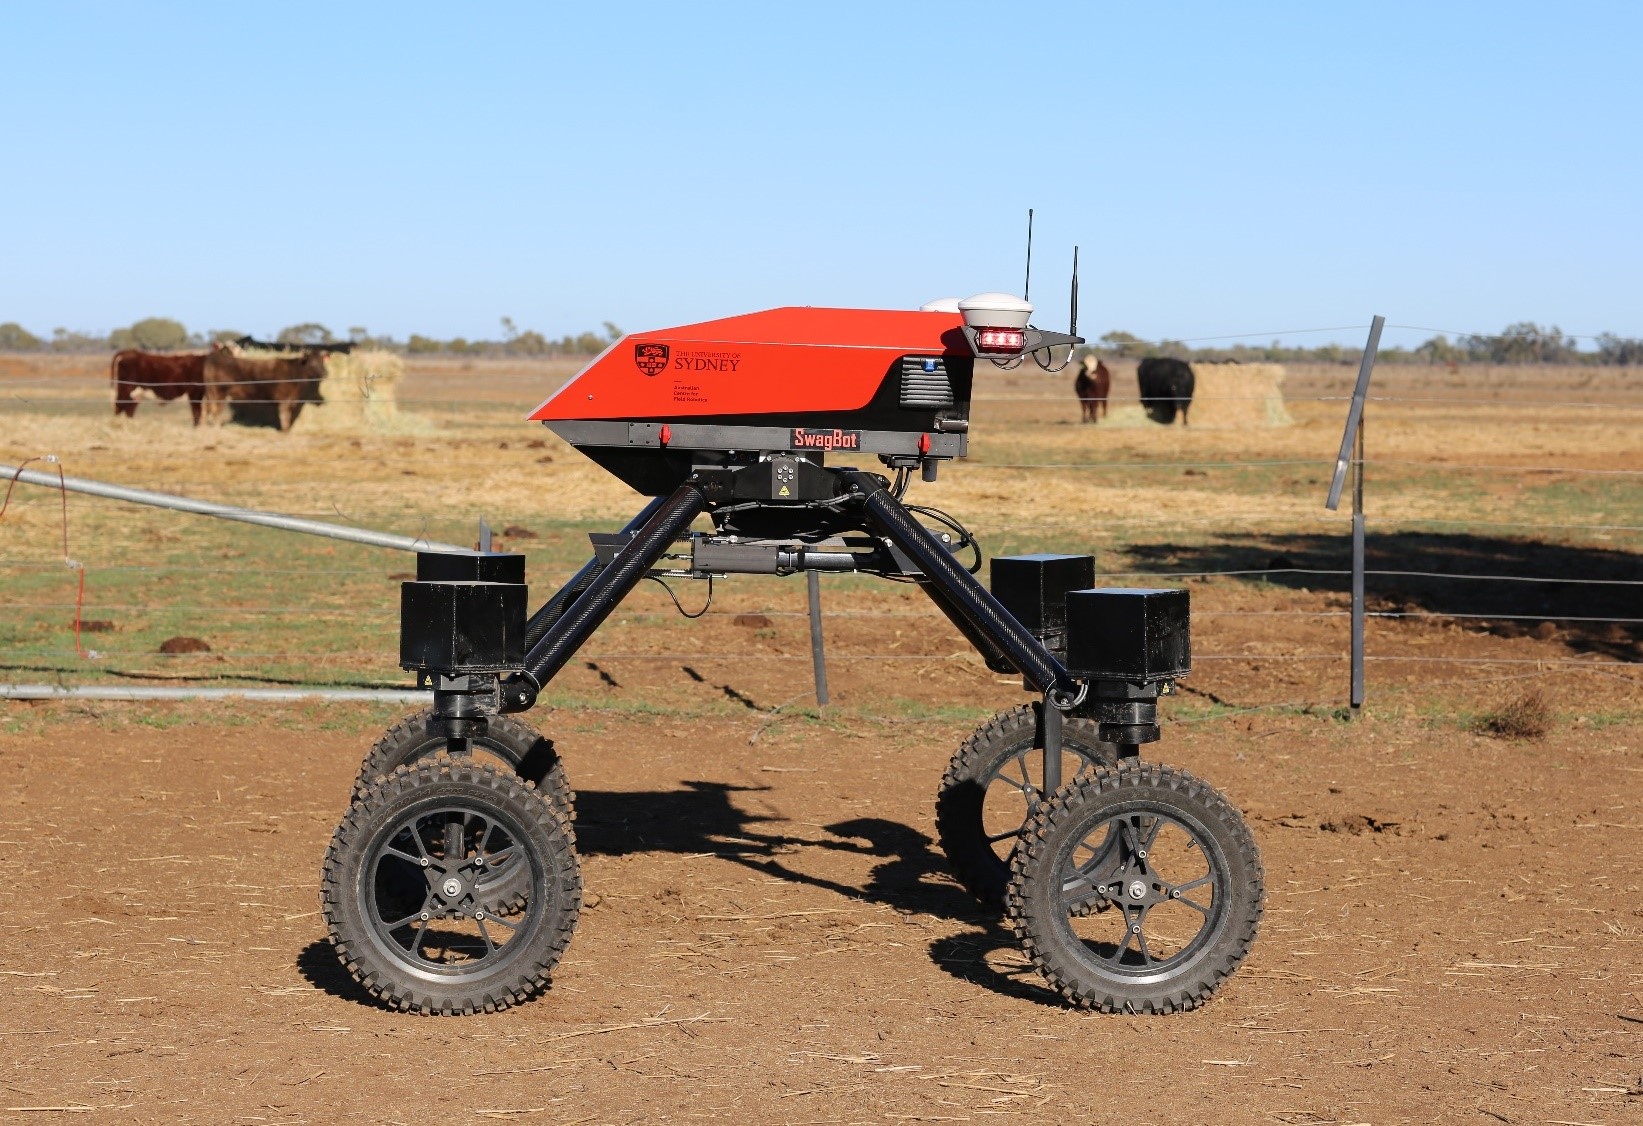 SwagBot was originally designed as an all-terrain cattle farming robot.